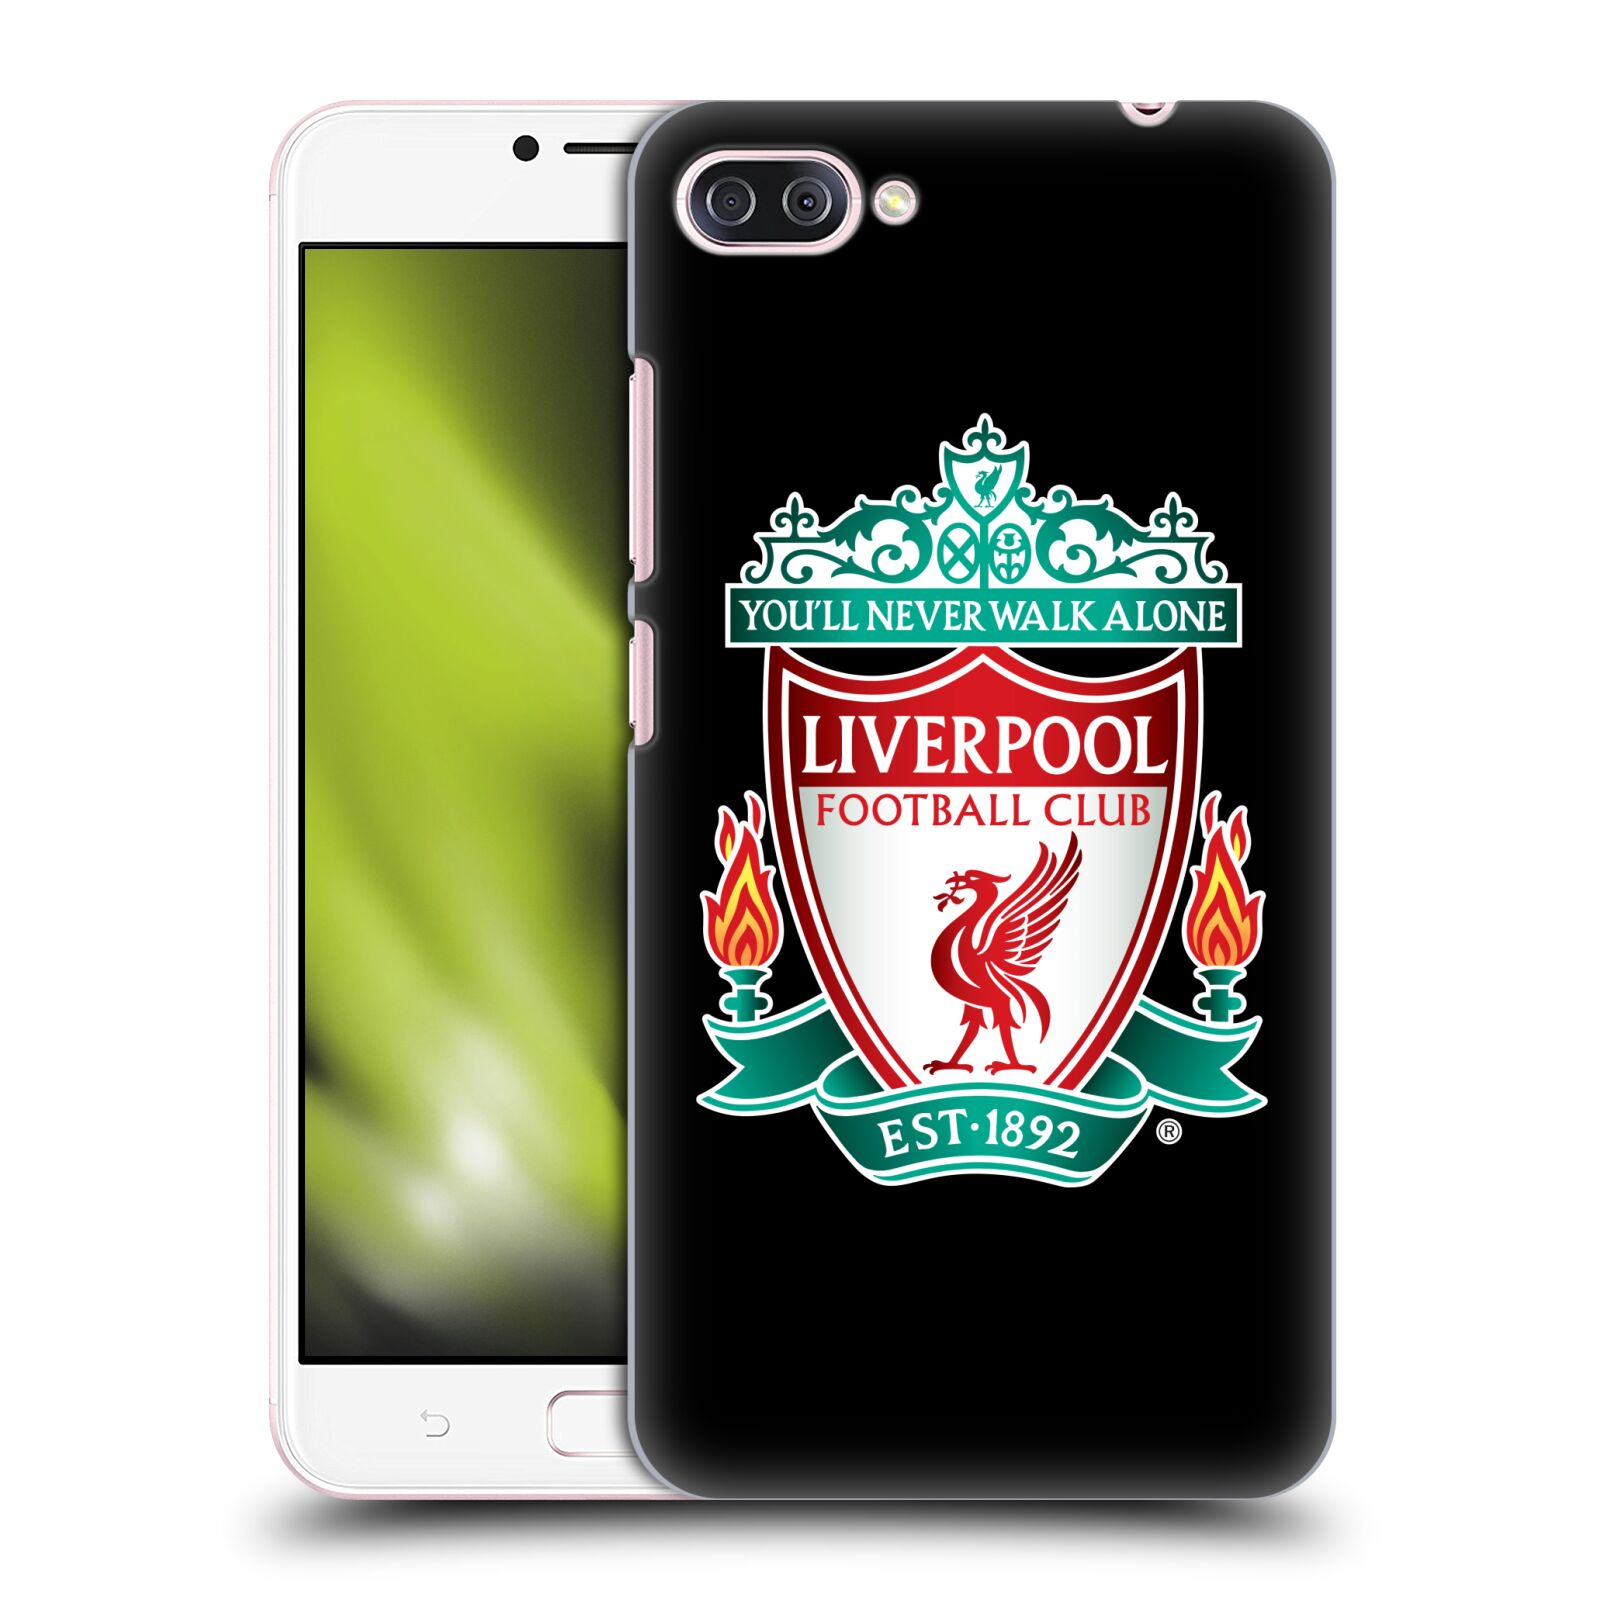 HEAD CASE plastový obal na mobil Asus Zenfone 4 MAX ZC554KL Fotbalový klub Liverpool barevný znak černé pozadí